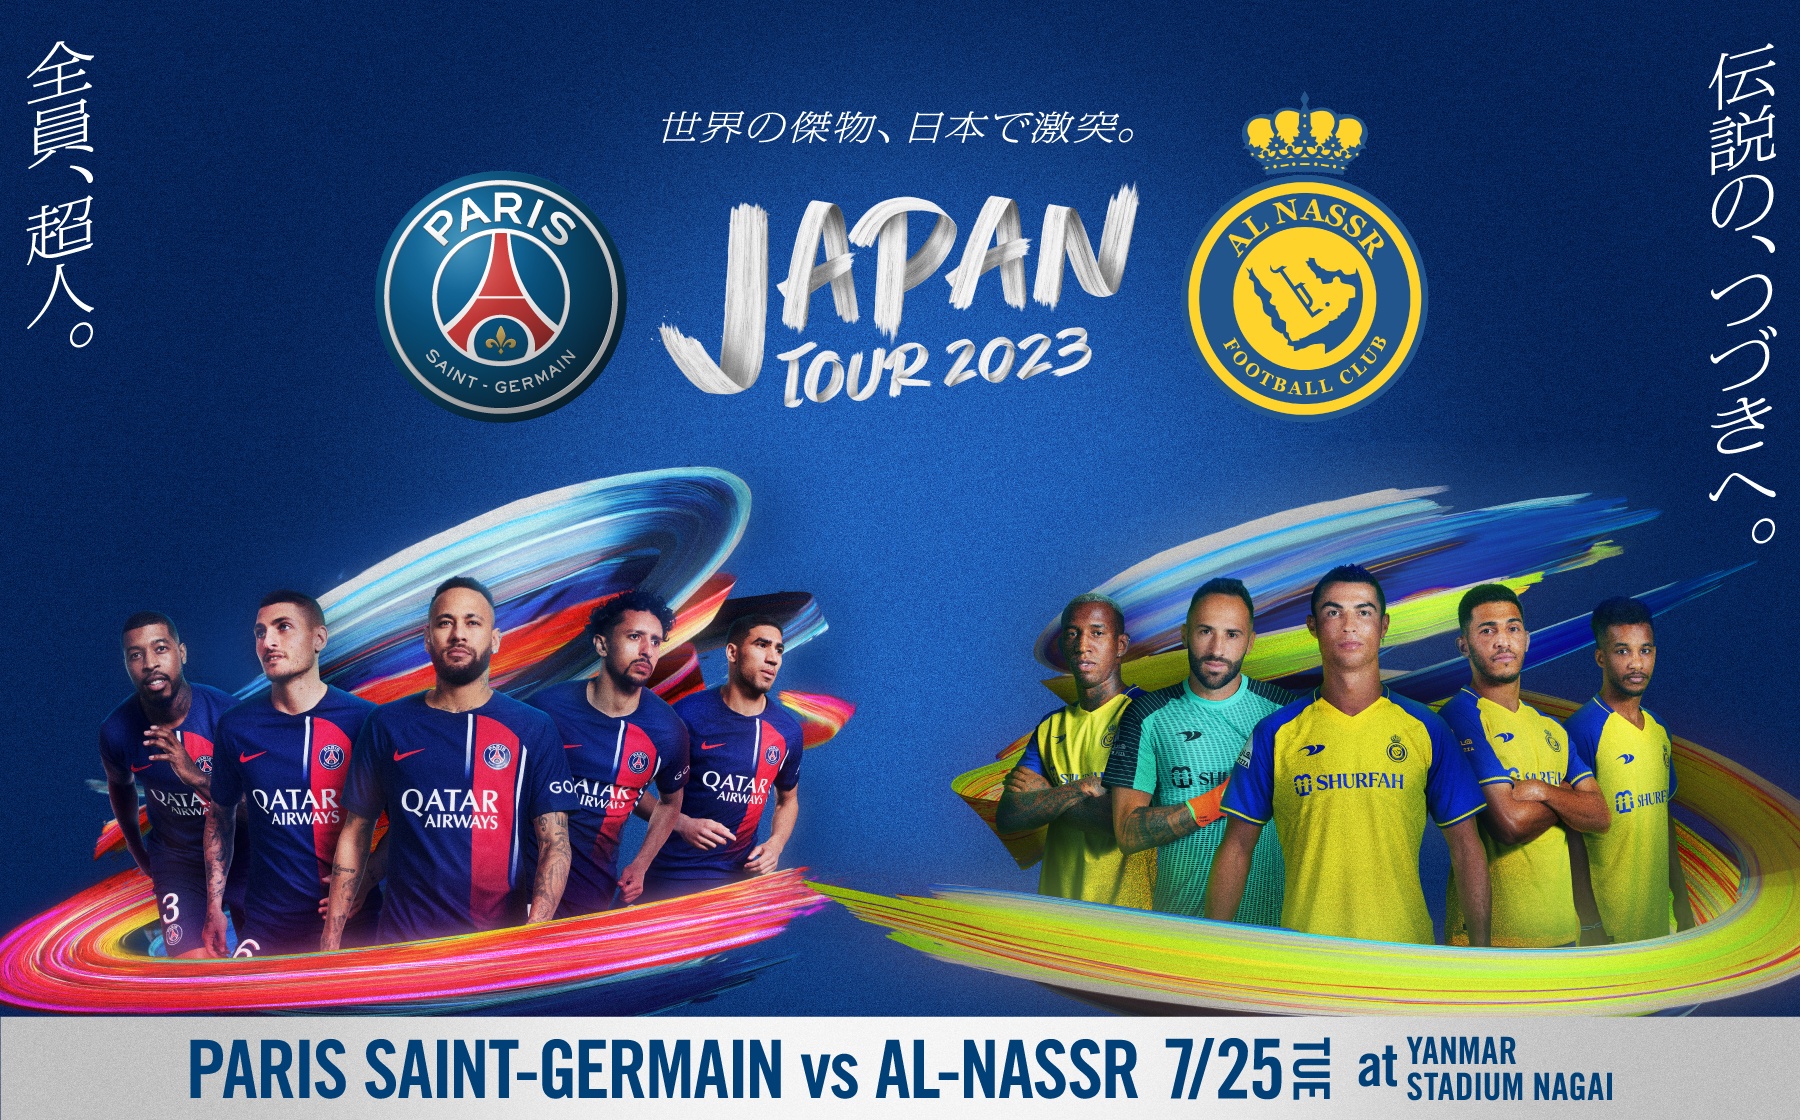 Paris Saint-Germain JAPAN TOUR 2023 | チケットぴあ[チケット購入・予約]